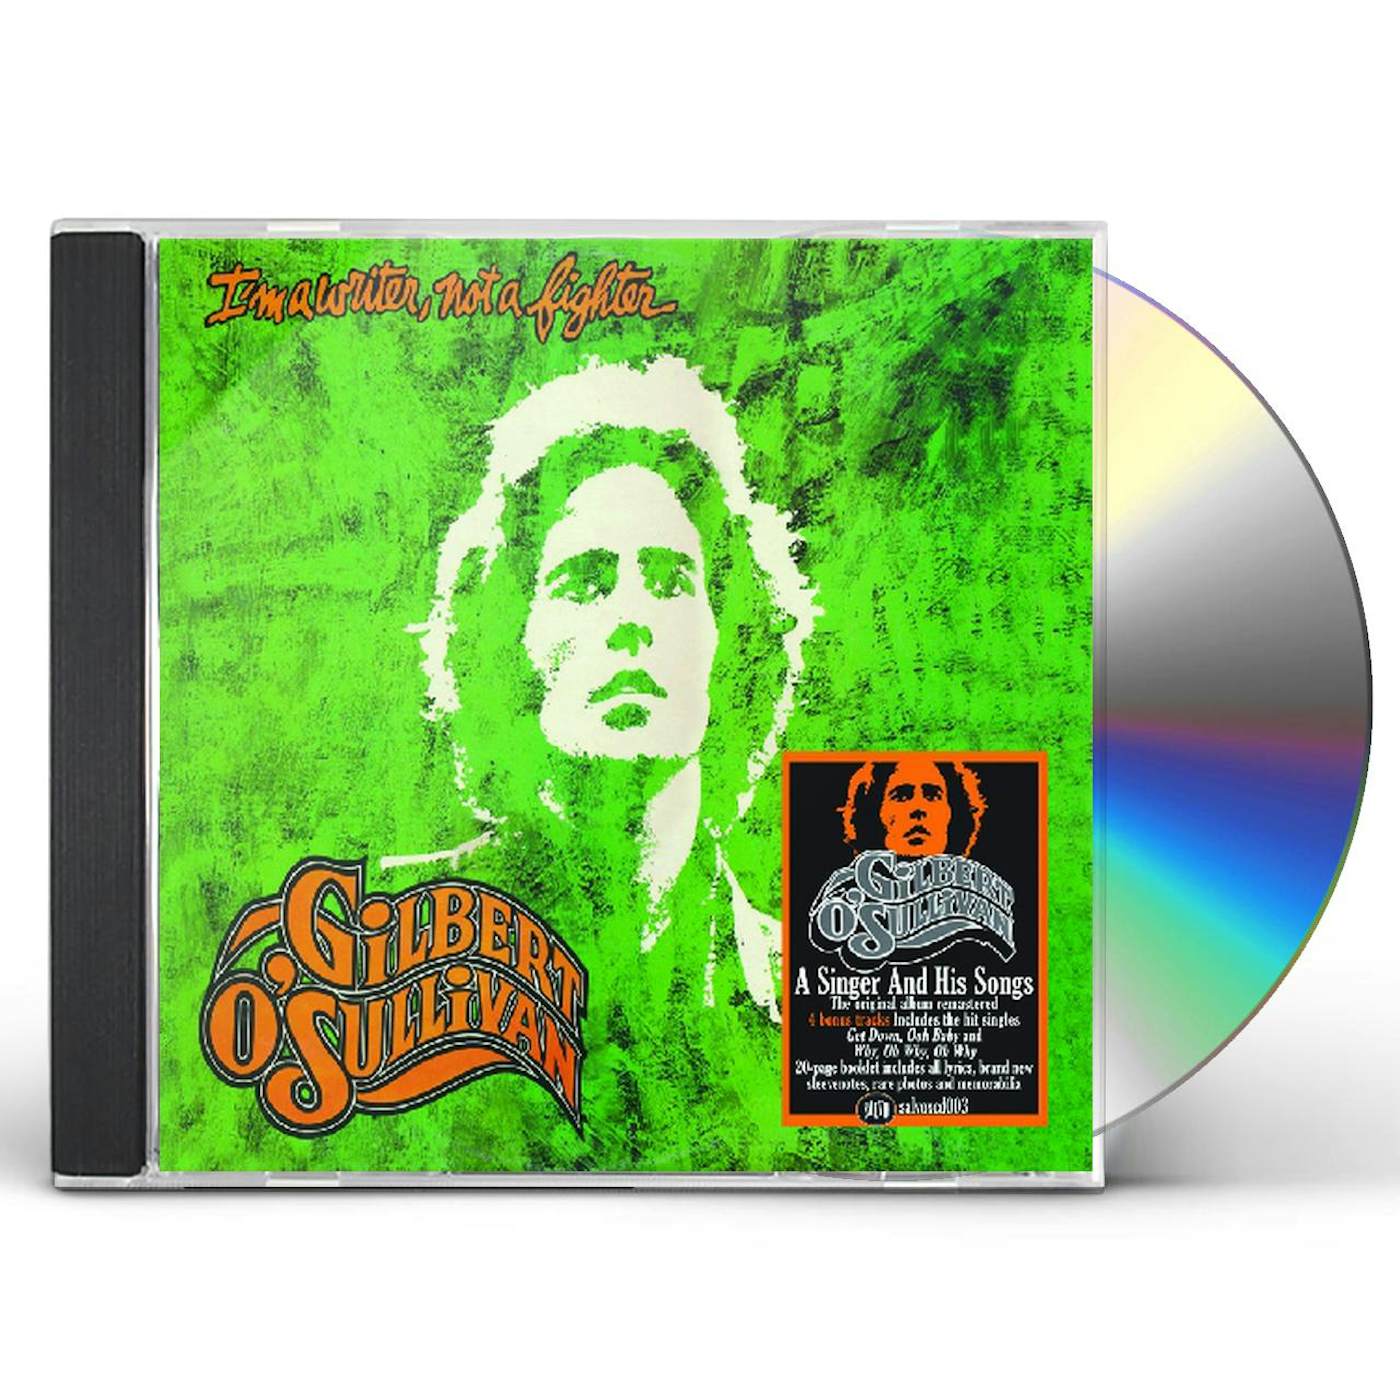 Gilbert O'Sullivan VERY BEST / ALONE AGAIN (NATURALLY) (21 CUTS) CD